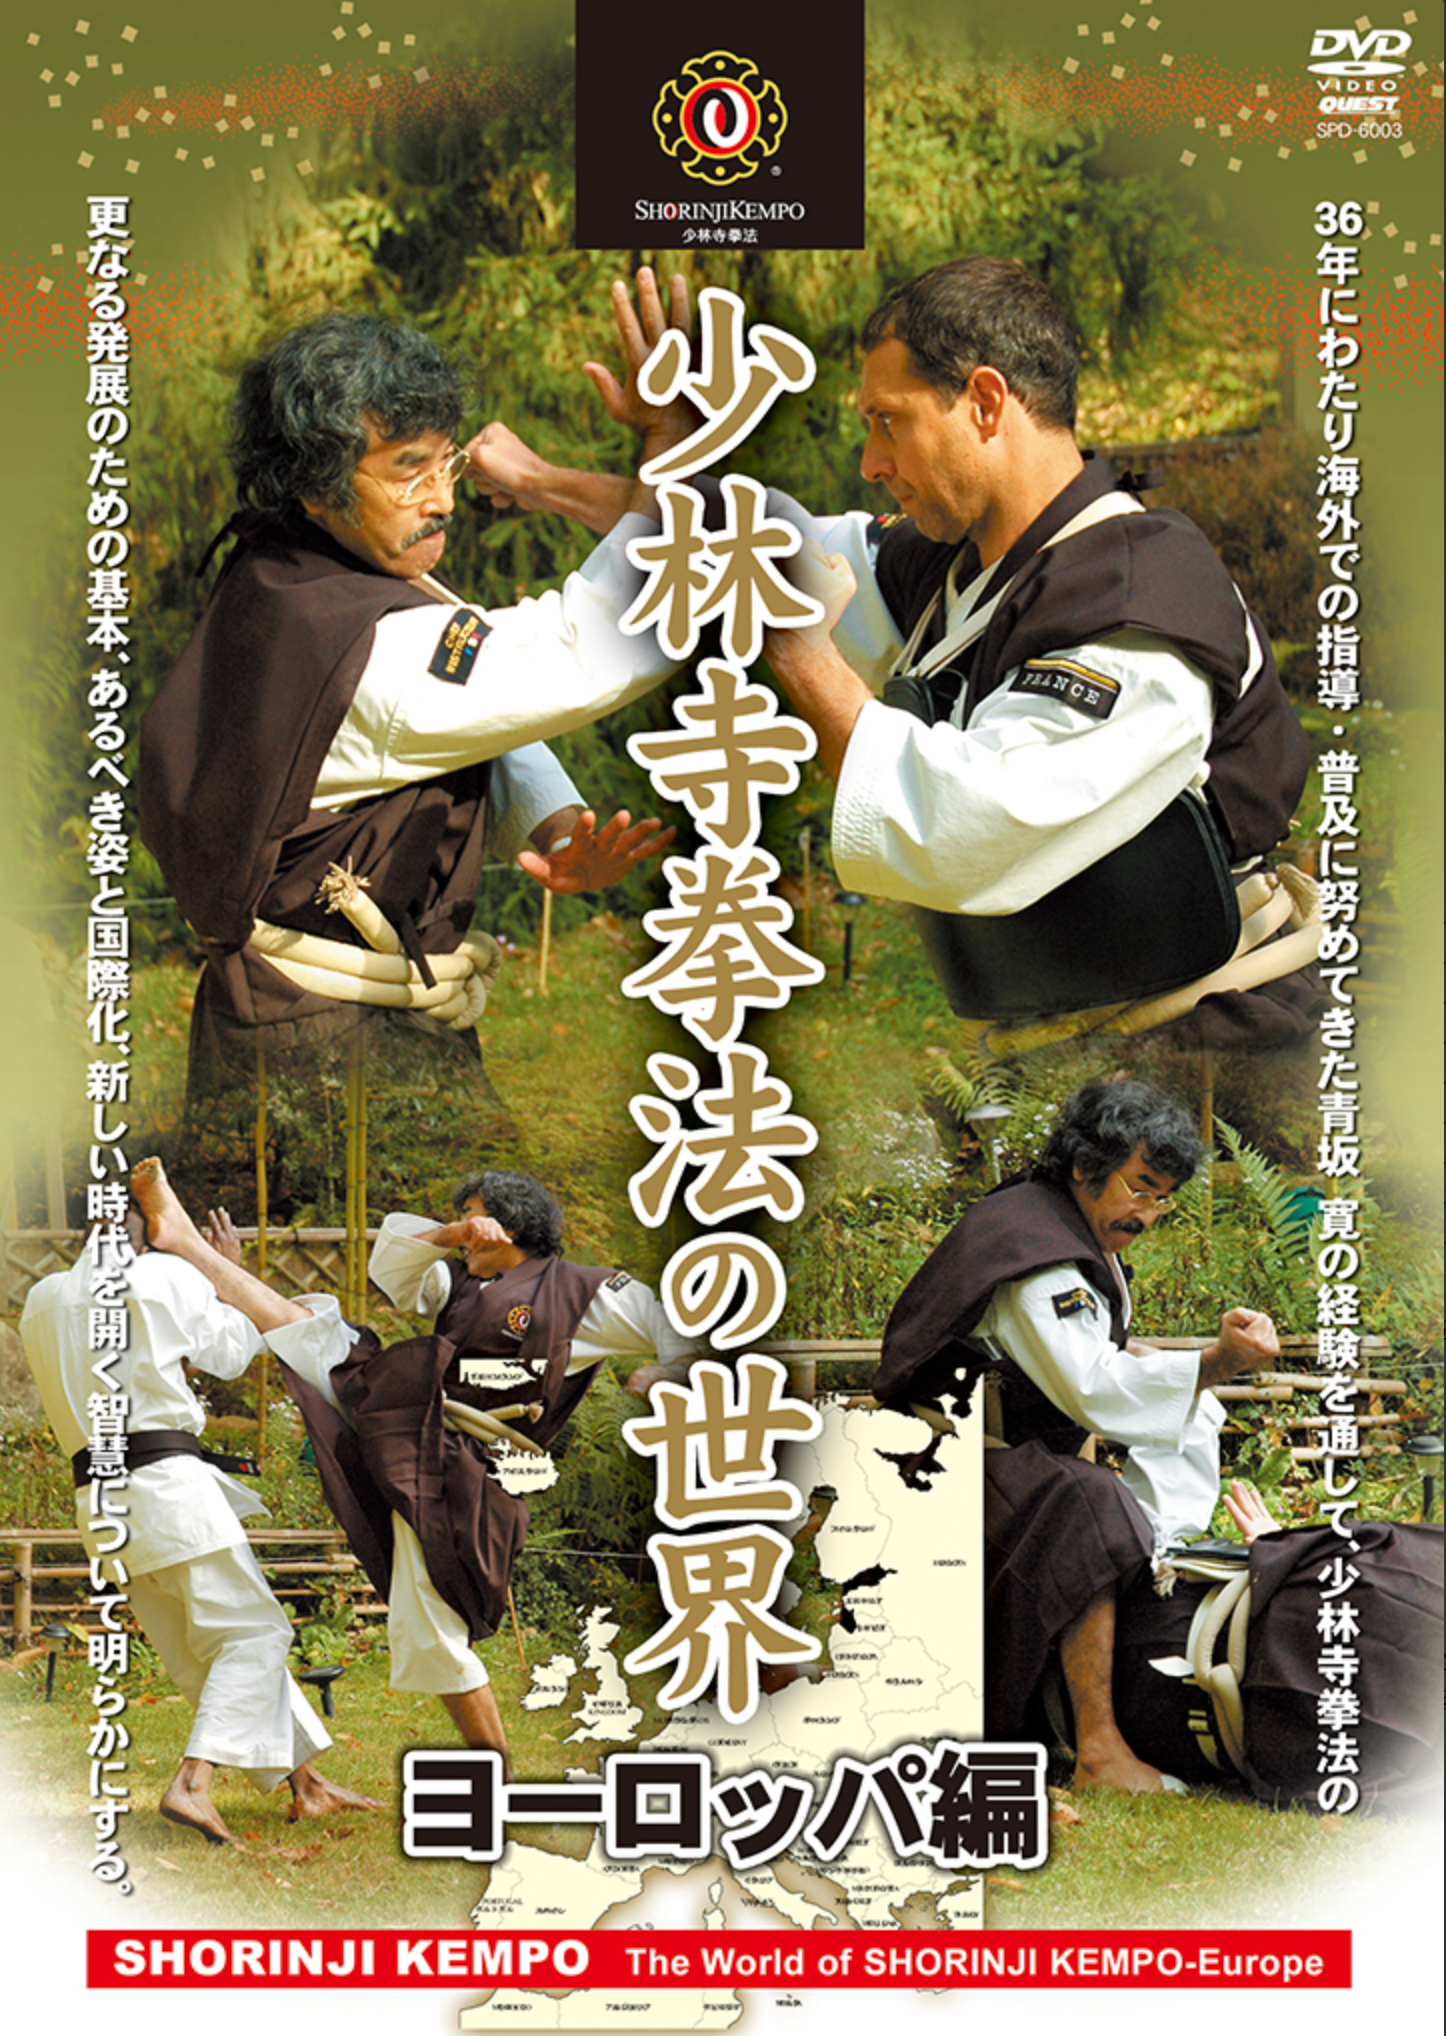 Shorinji Kempo World: Europe DVD by Hiroshi Aosaka - Budovideos Inc